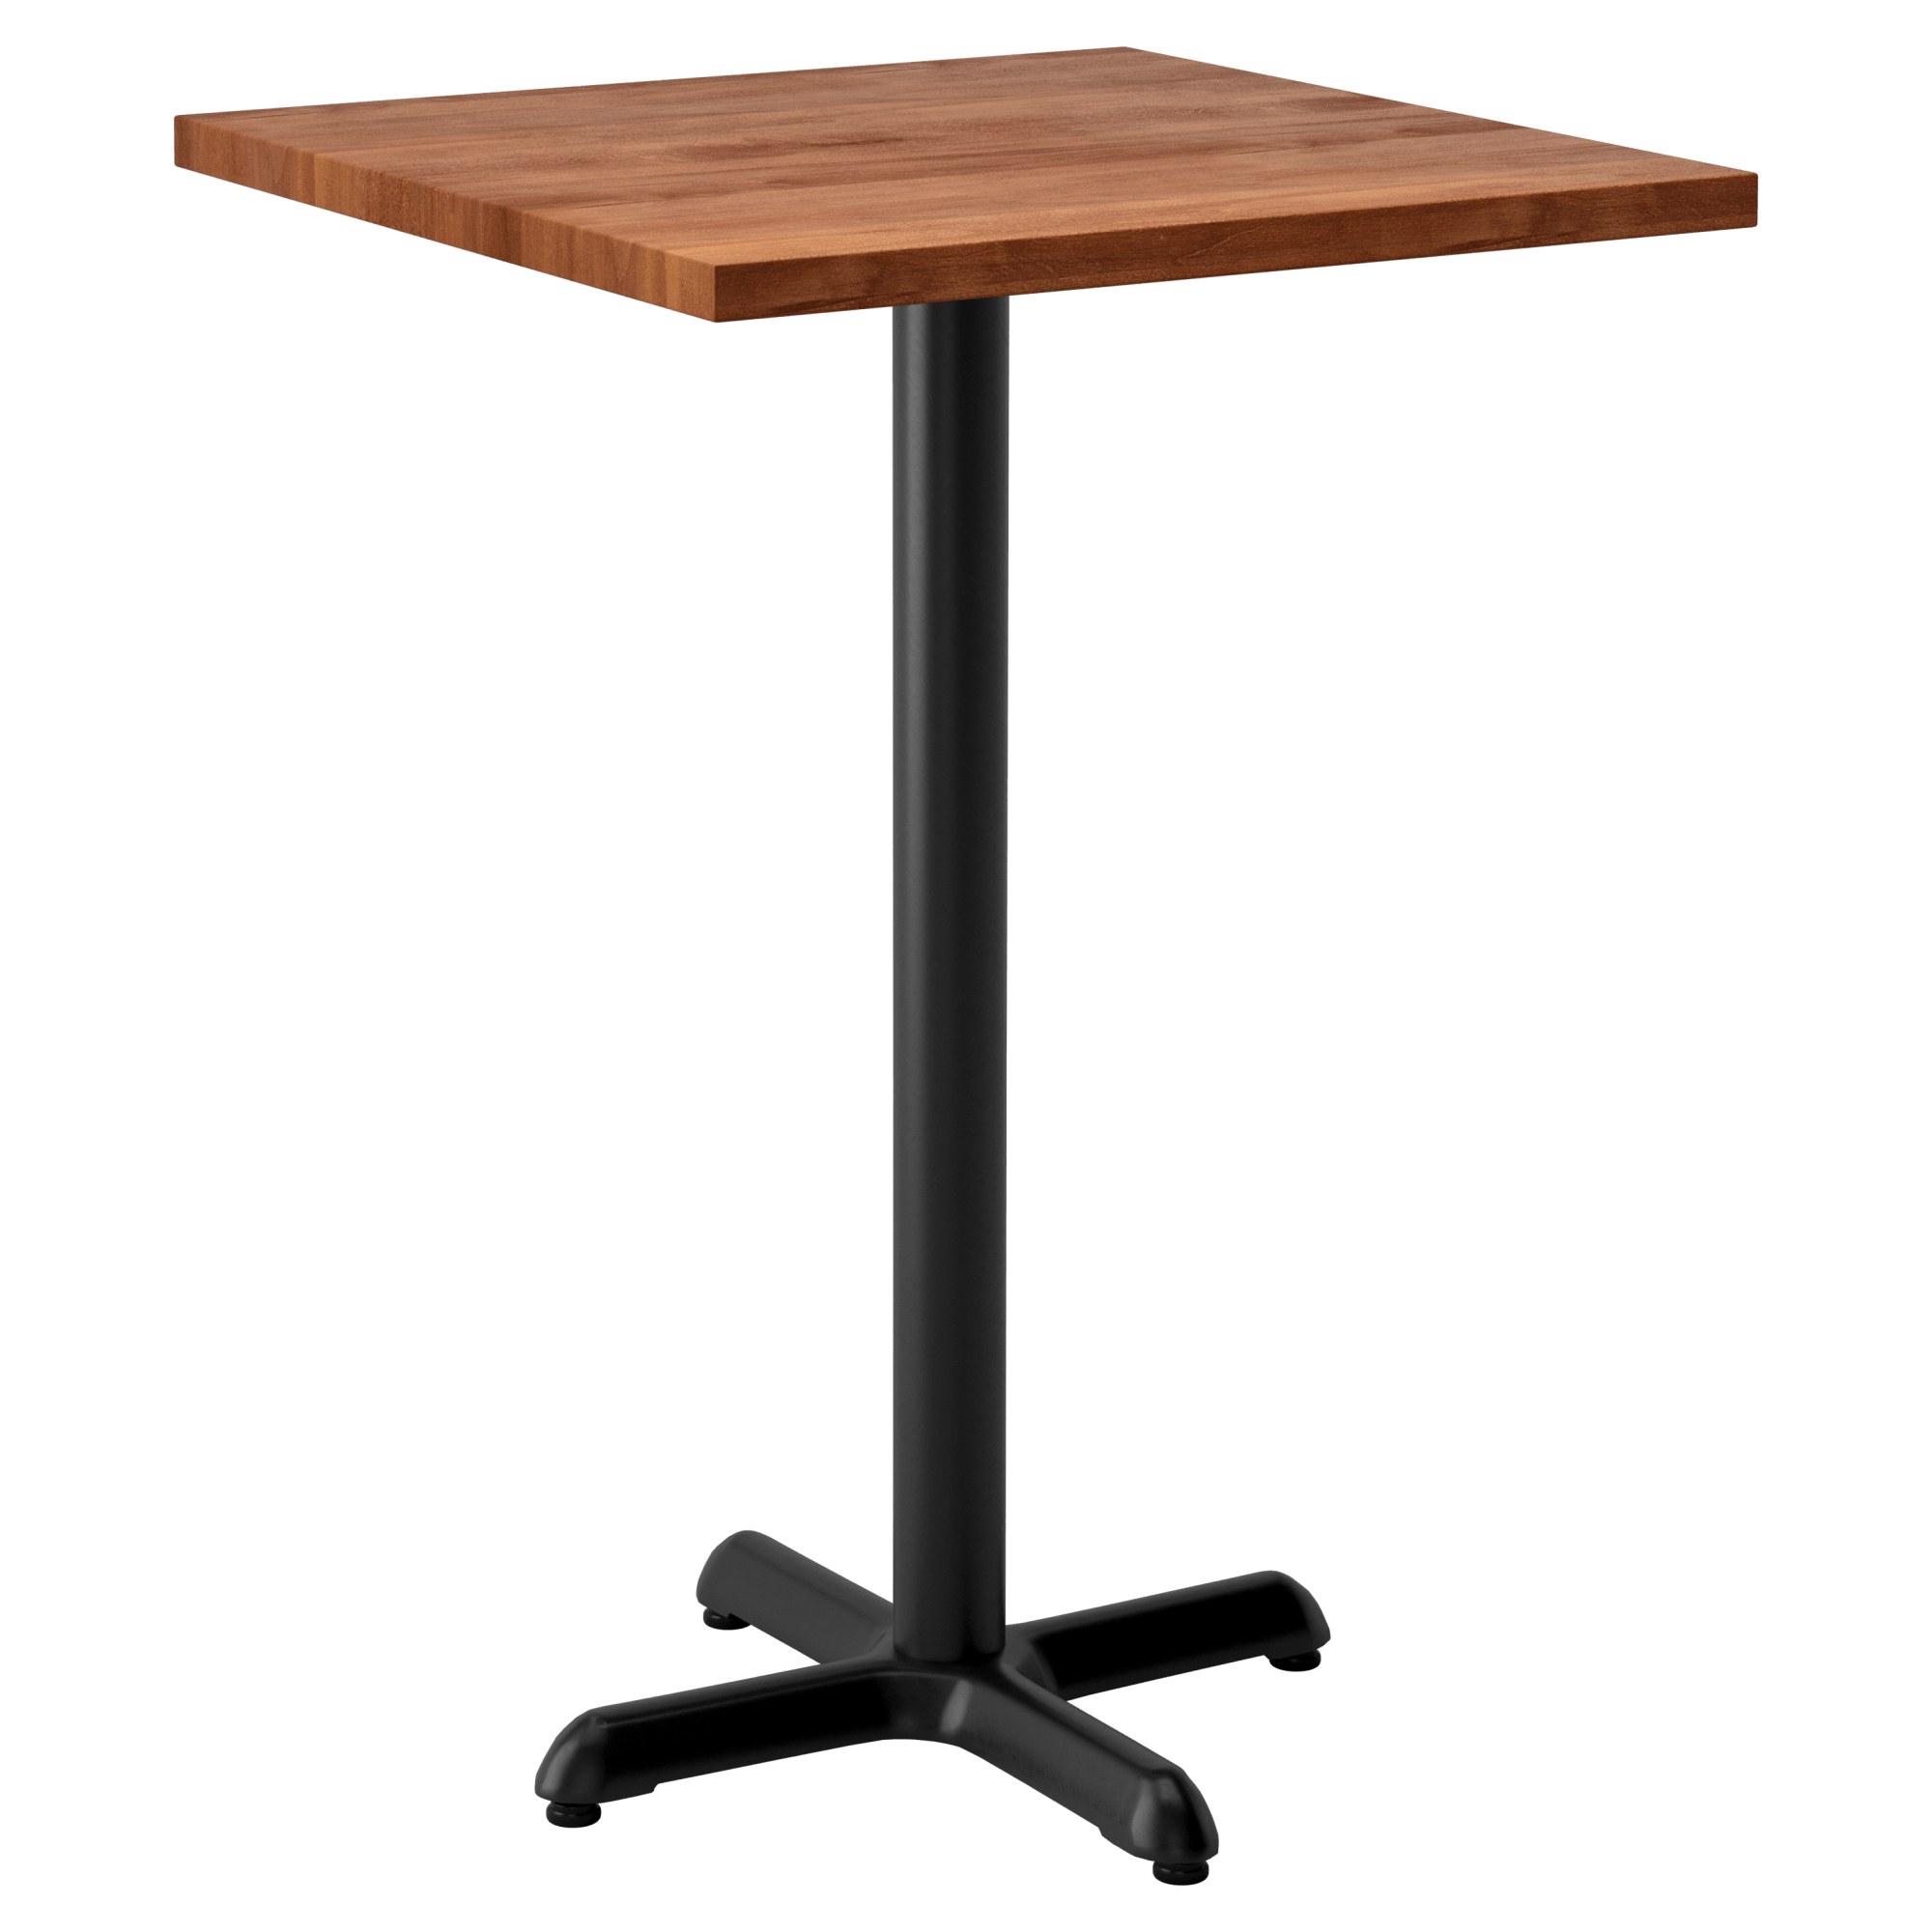 Premium Solid Wood Plank Restaurant Table - Bar Height